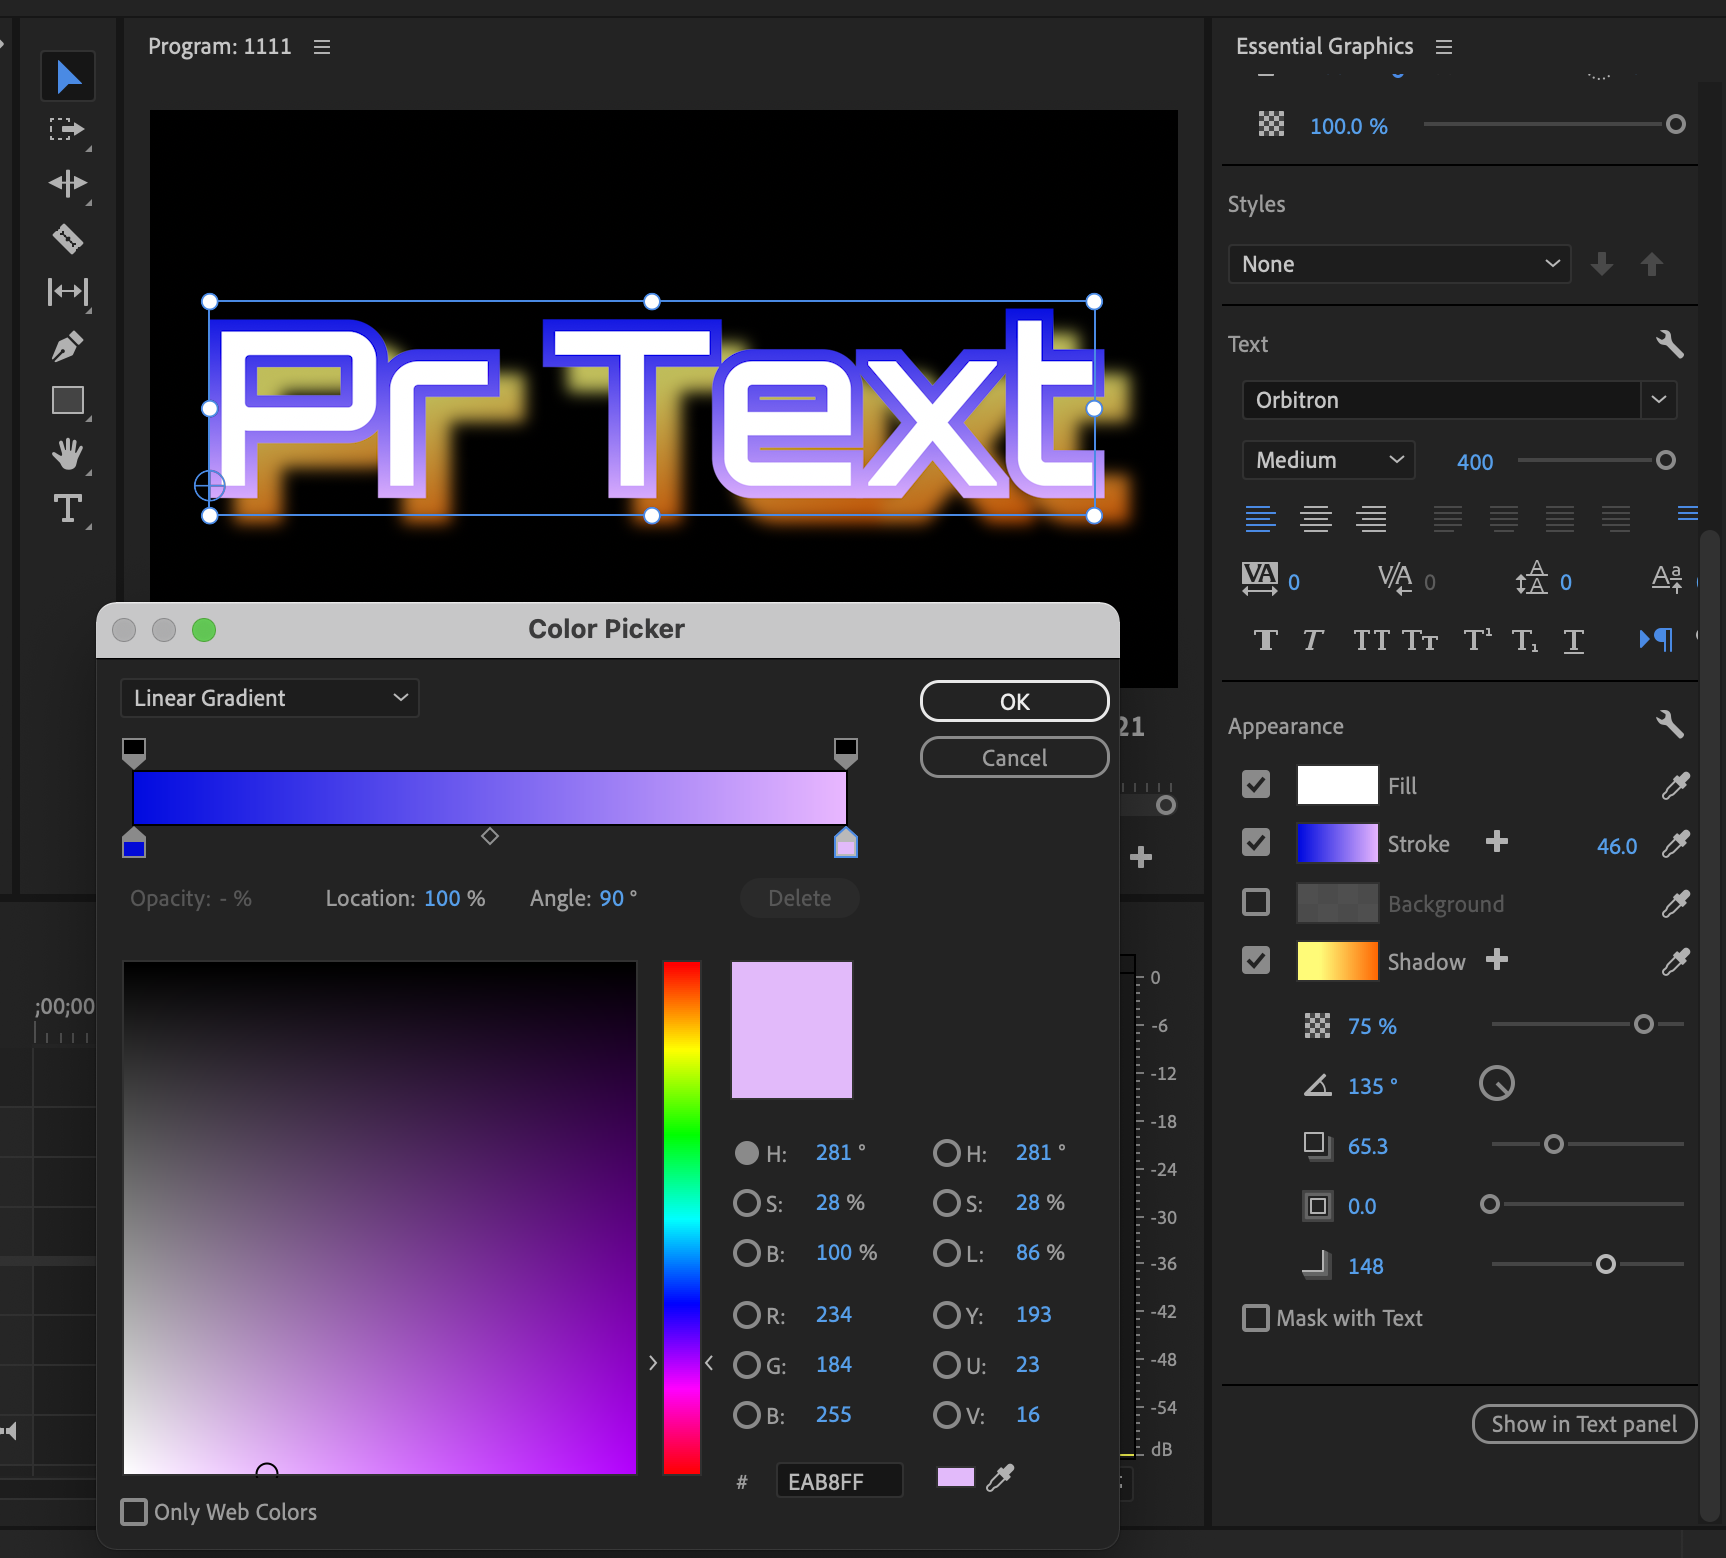 Adobe Premiere Pro - gradienty do kresek i cieni